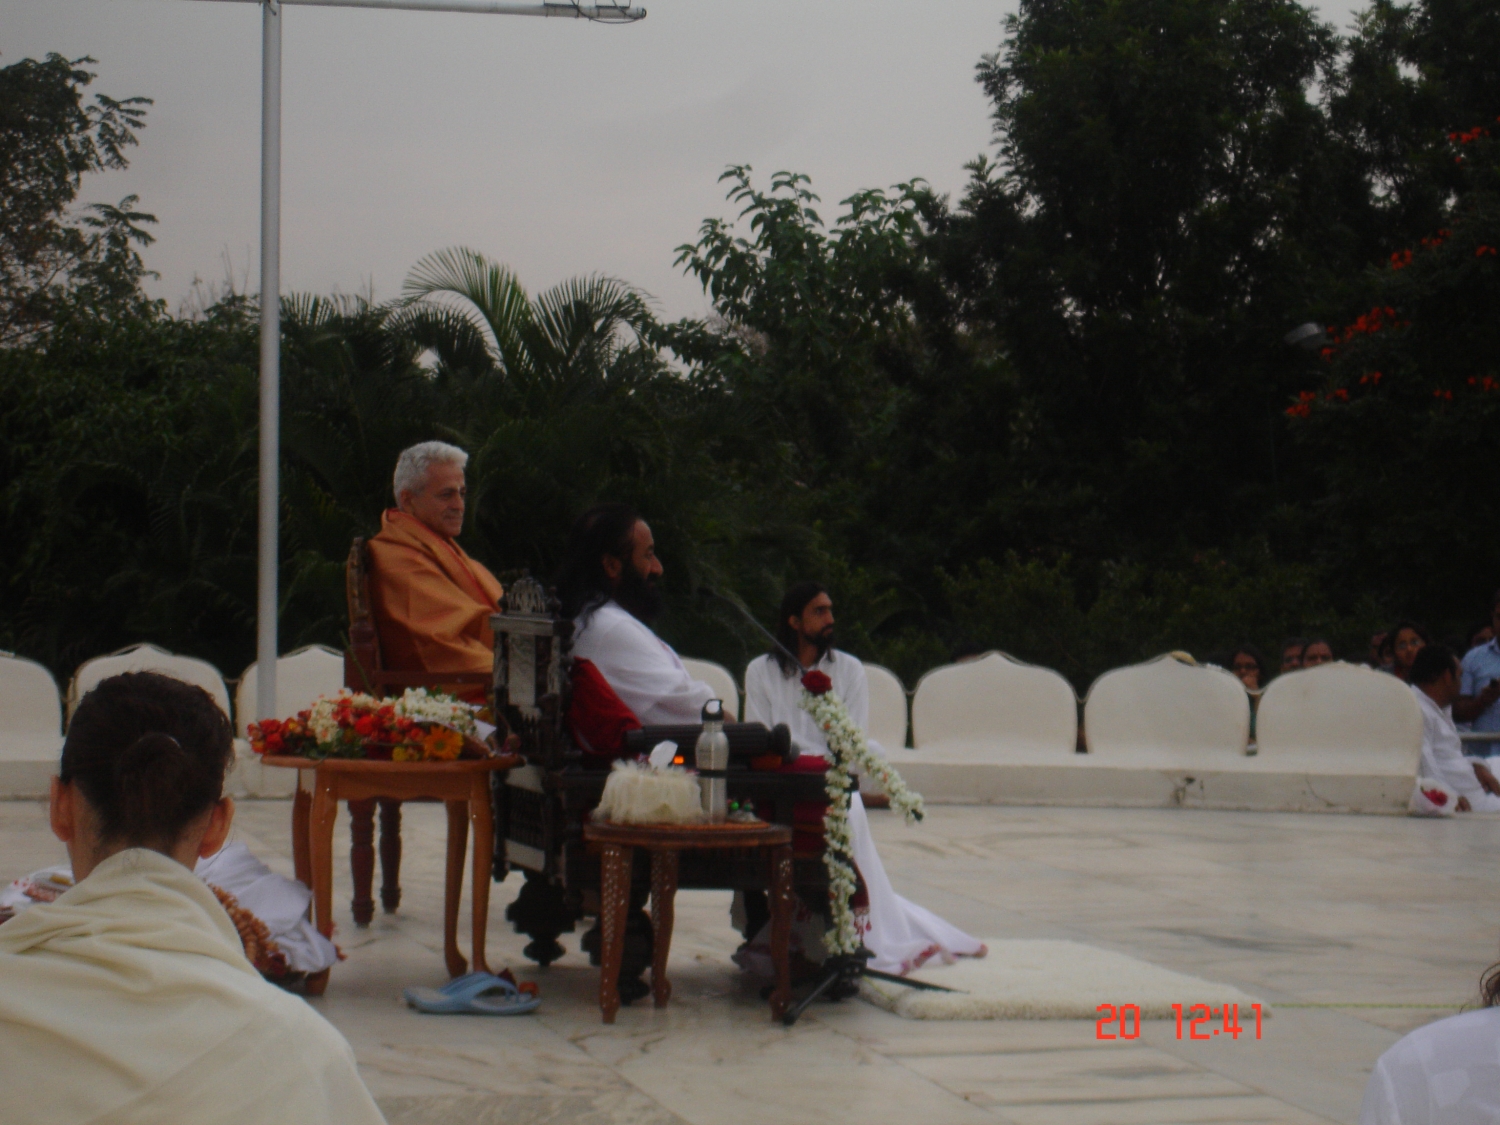 Encontro de H.H. Jagat Guru Amrta Súryánanda Mahá Rája com Shrí Shrí Ravi Shankar - Sede da Art of Living Foundation, Bengaluru, Índia - 2010, Janeiro